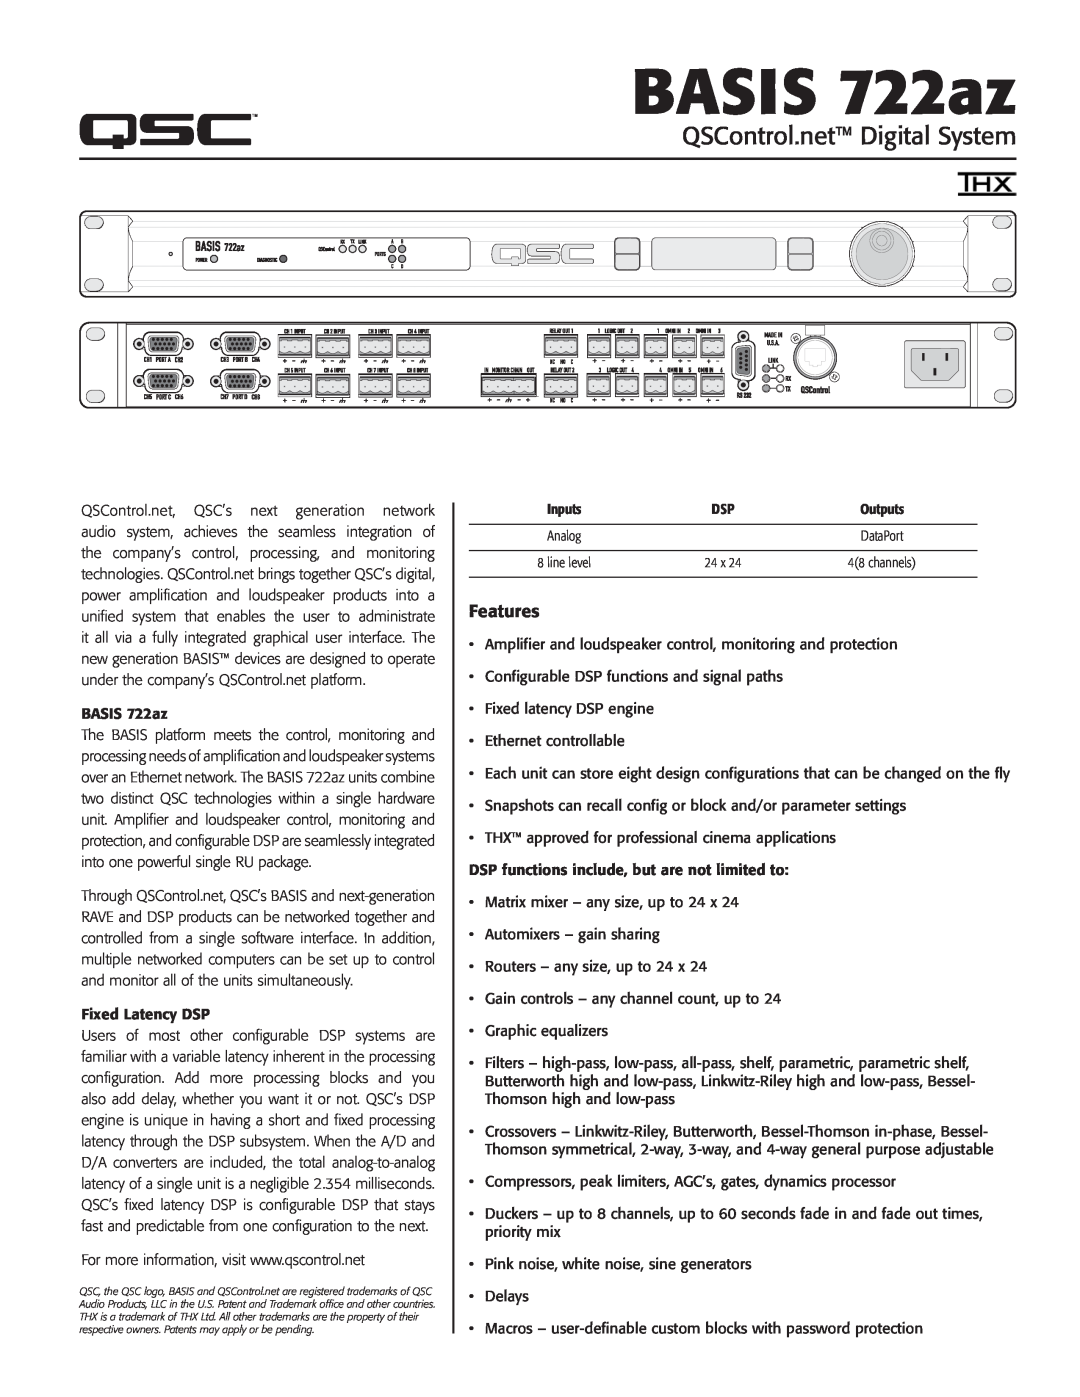 QSC Audio manual Features, BASIS 722az, QSControl.net Digital System 